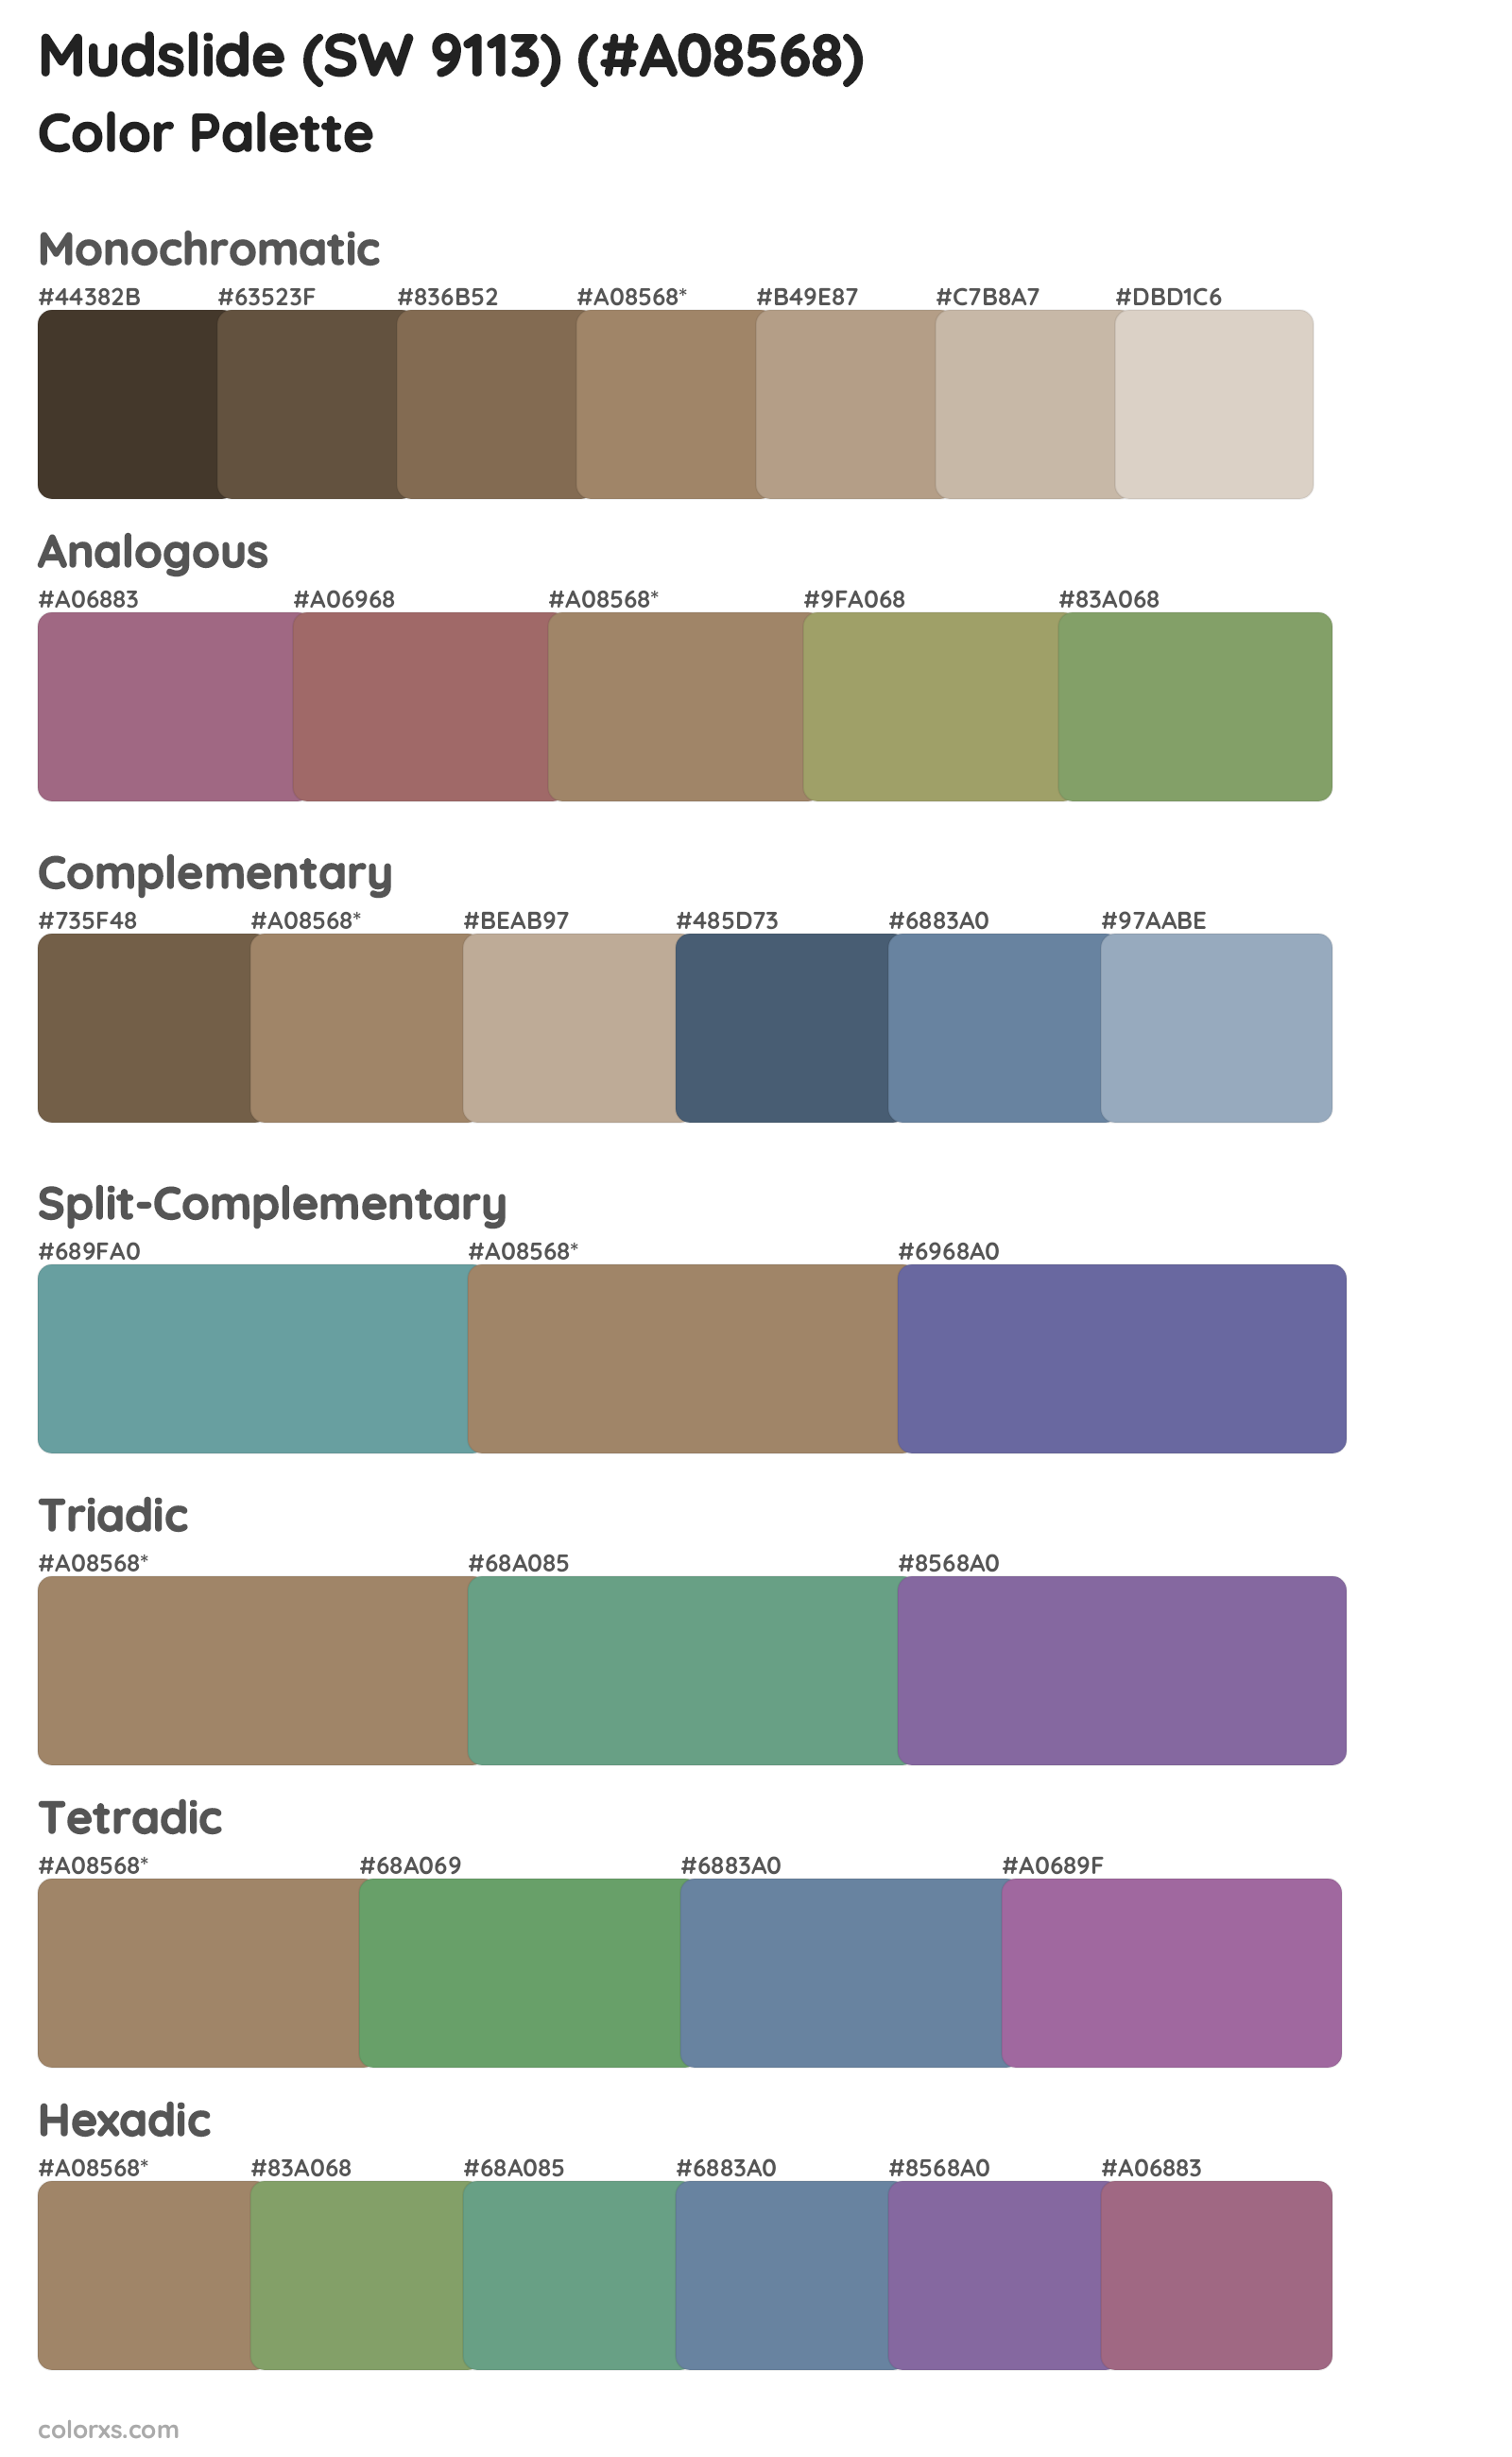 Mudslide (SW 9113) Color Scheme Palettes